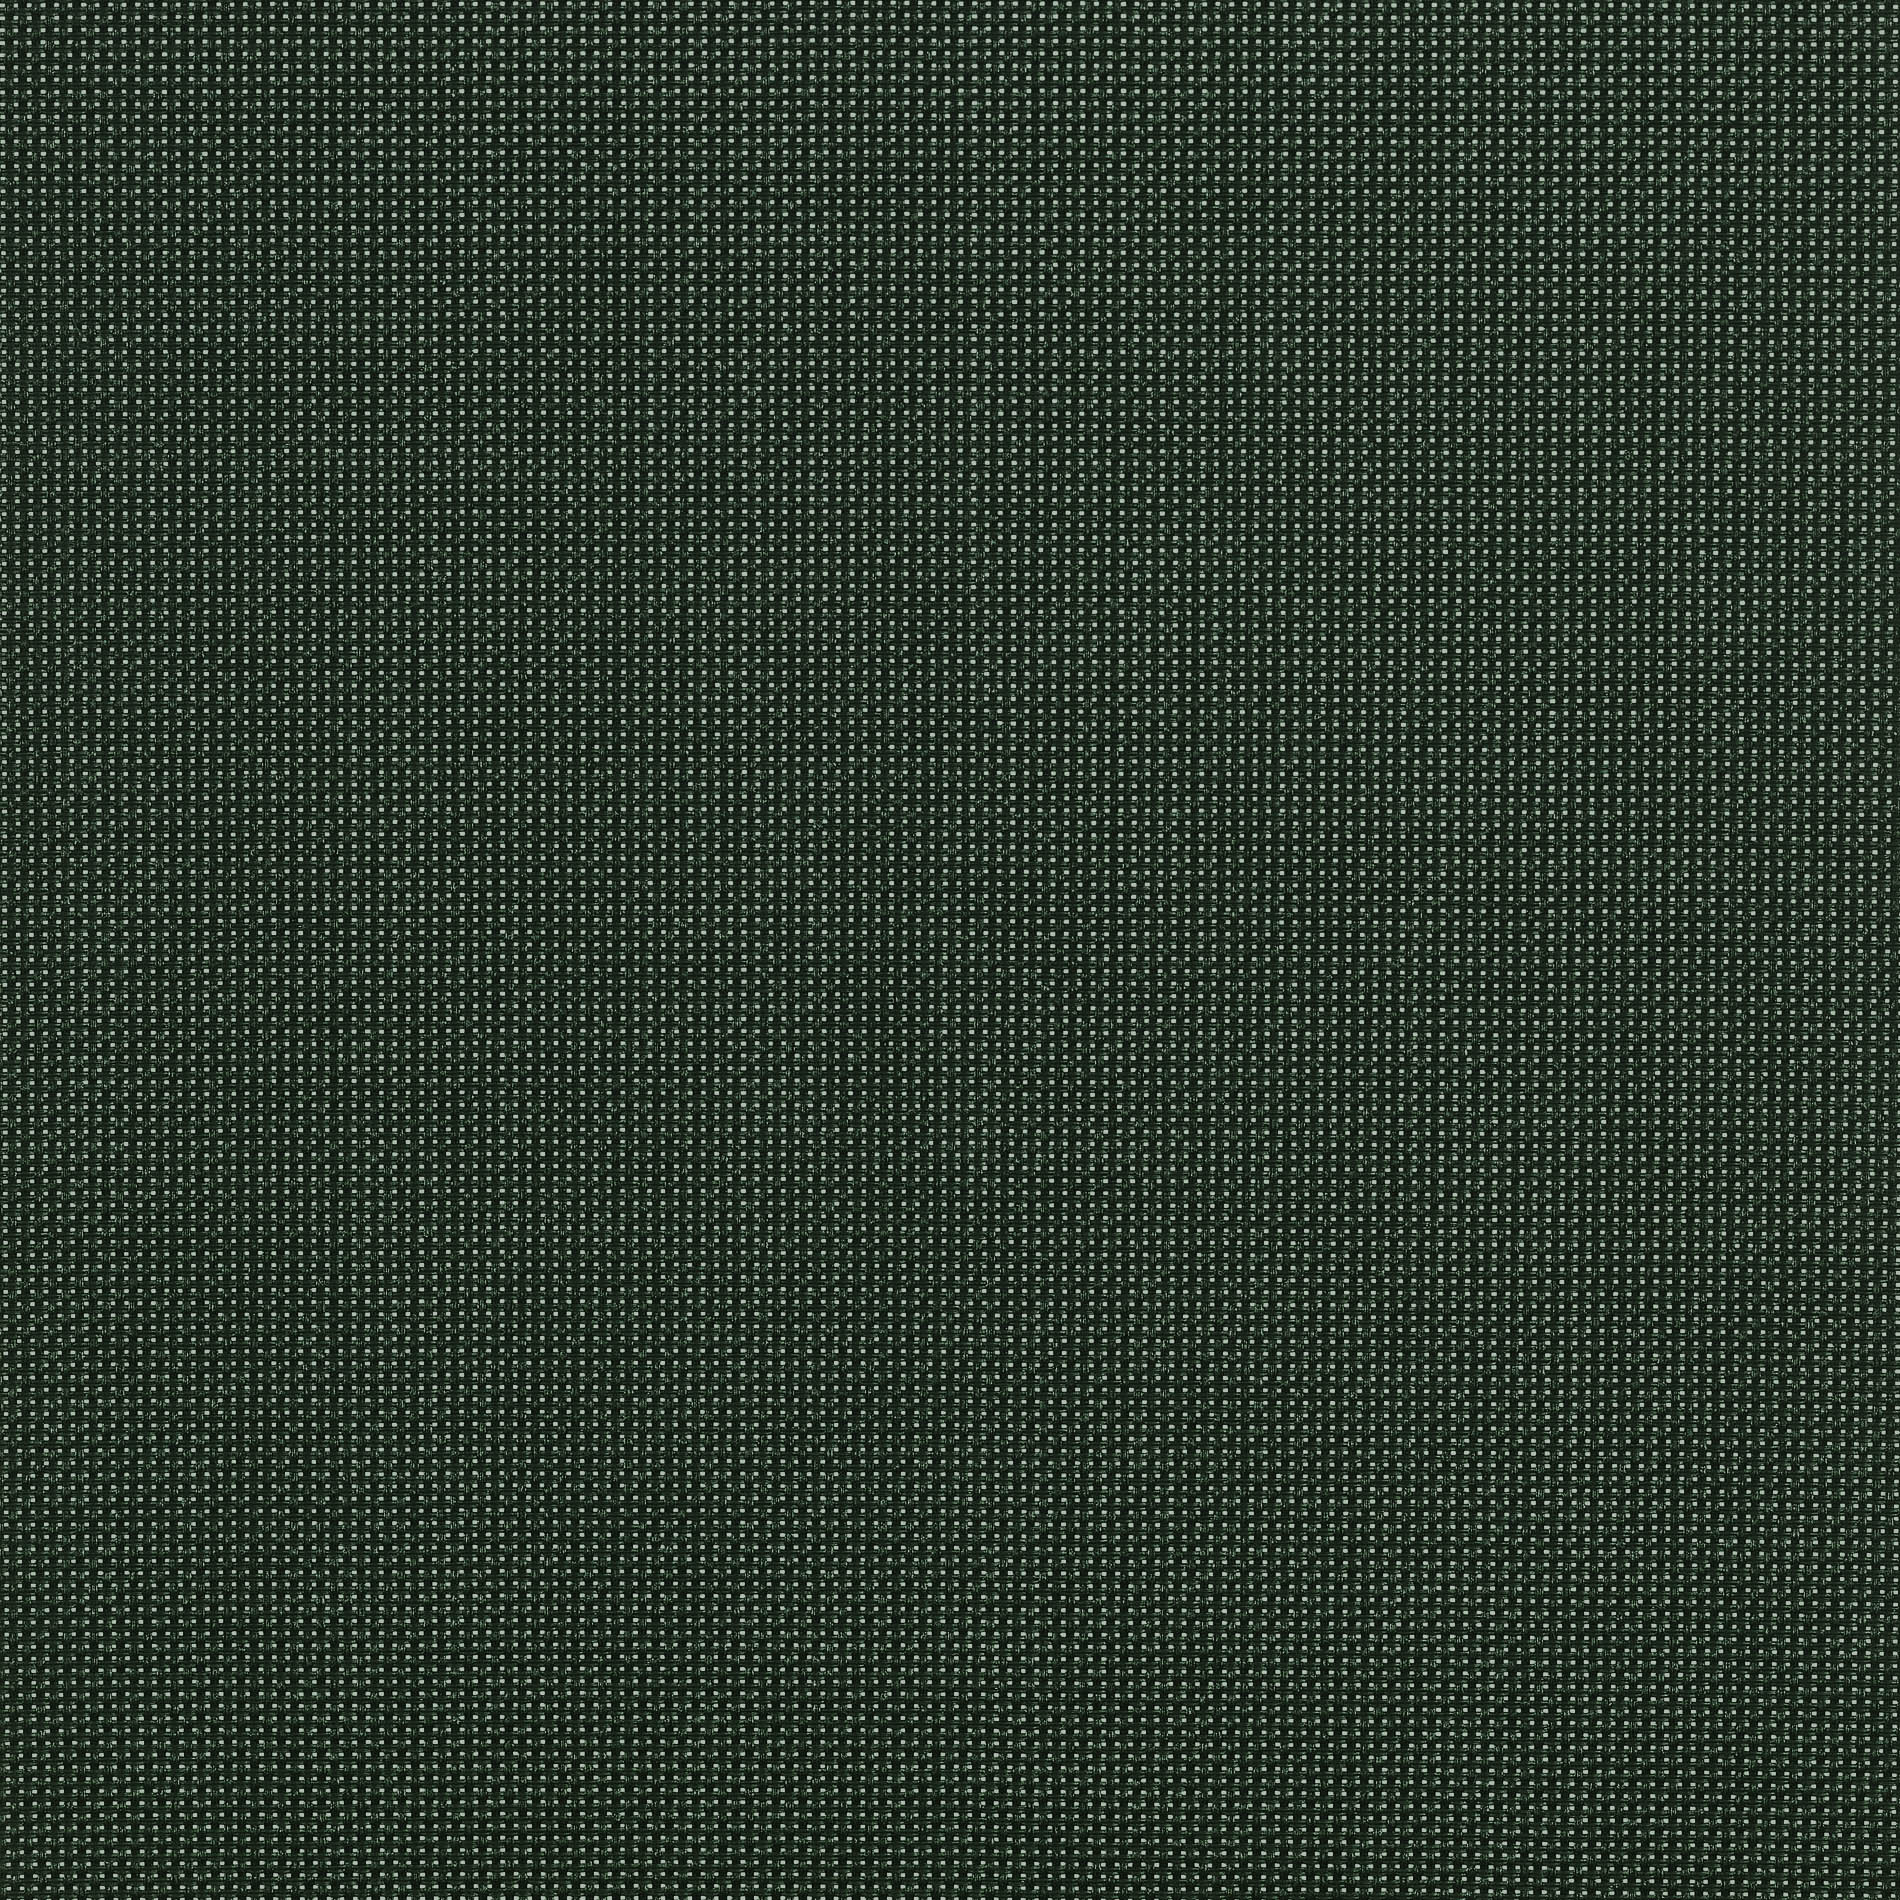 Altex - Fabric - NATTÉ 10% - Charcoal/Forest - 930993_TEMP_3